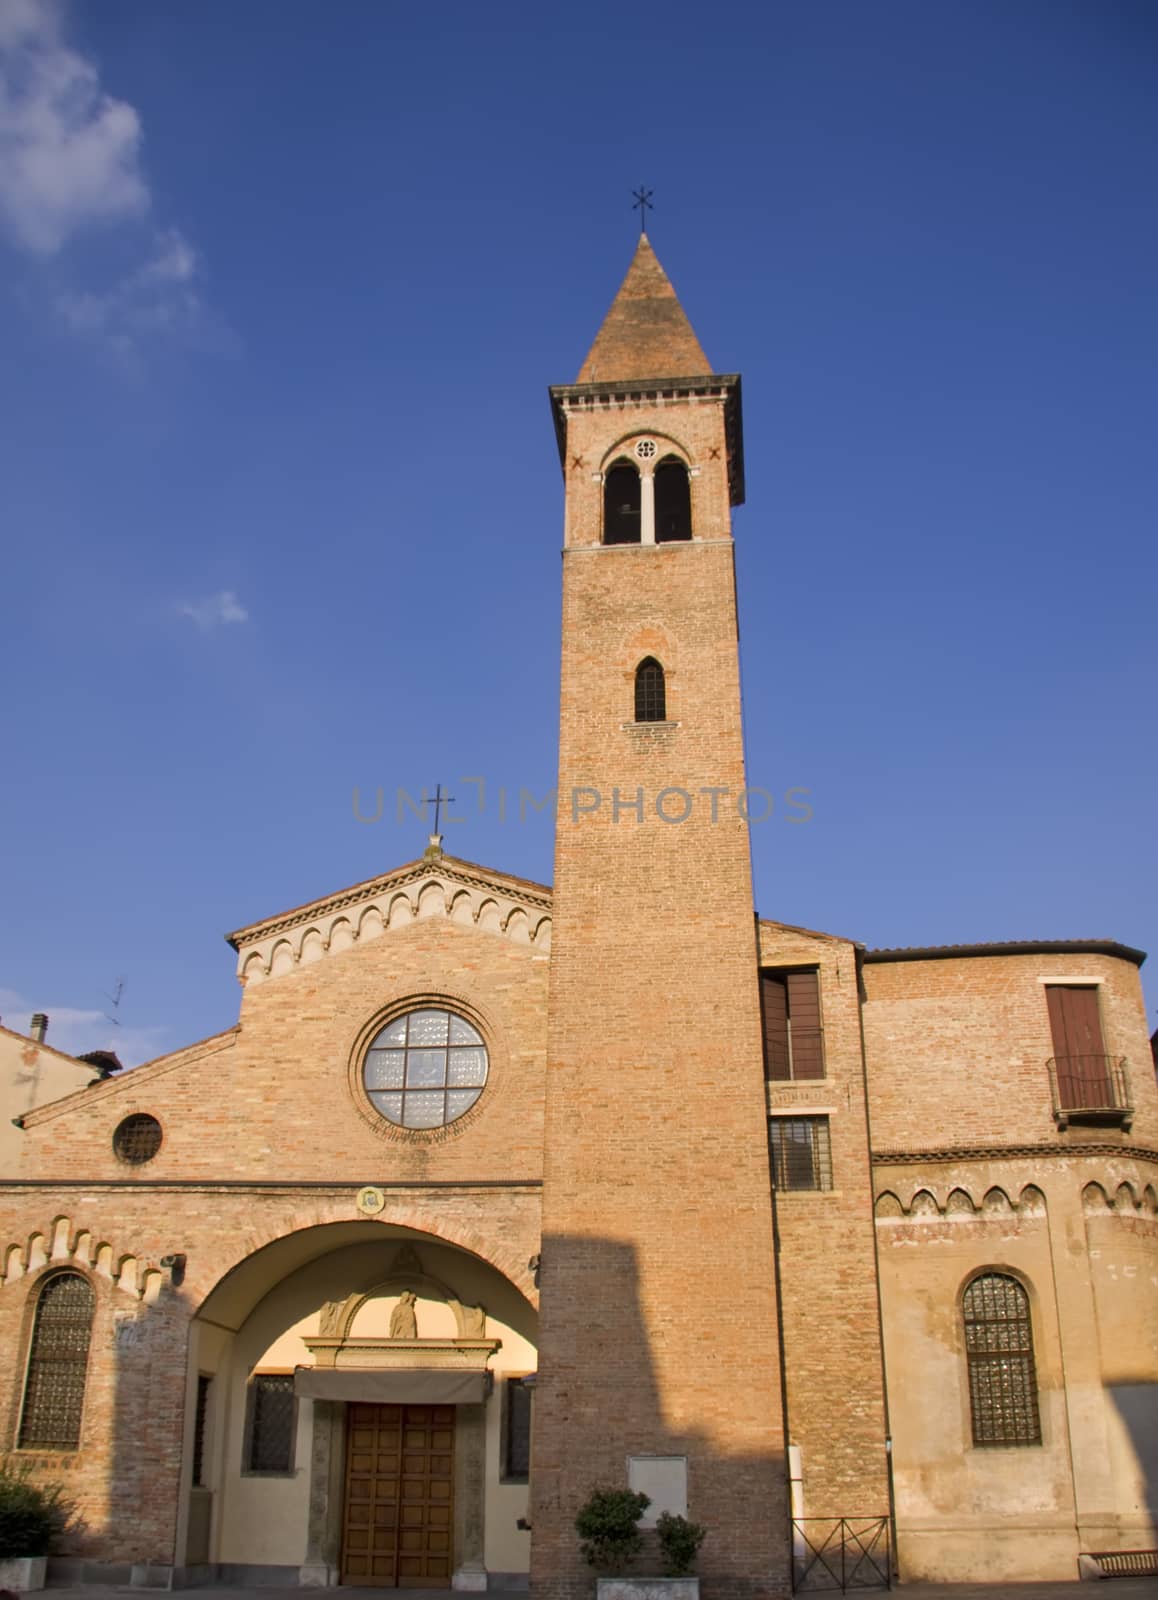 Church tower in Padua by fotoecho